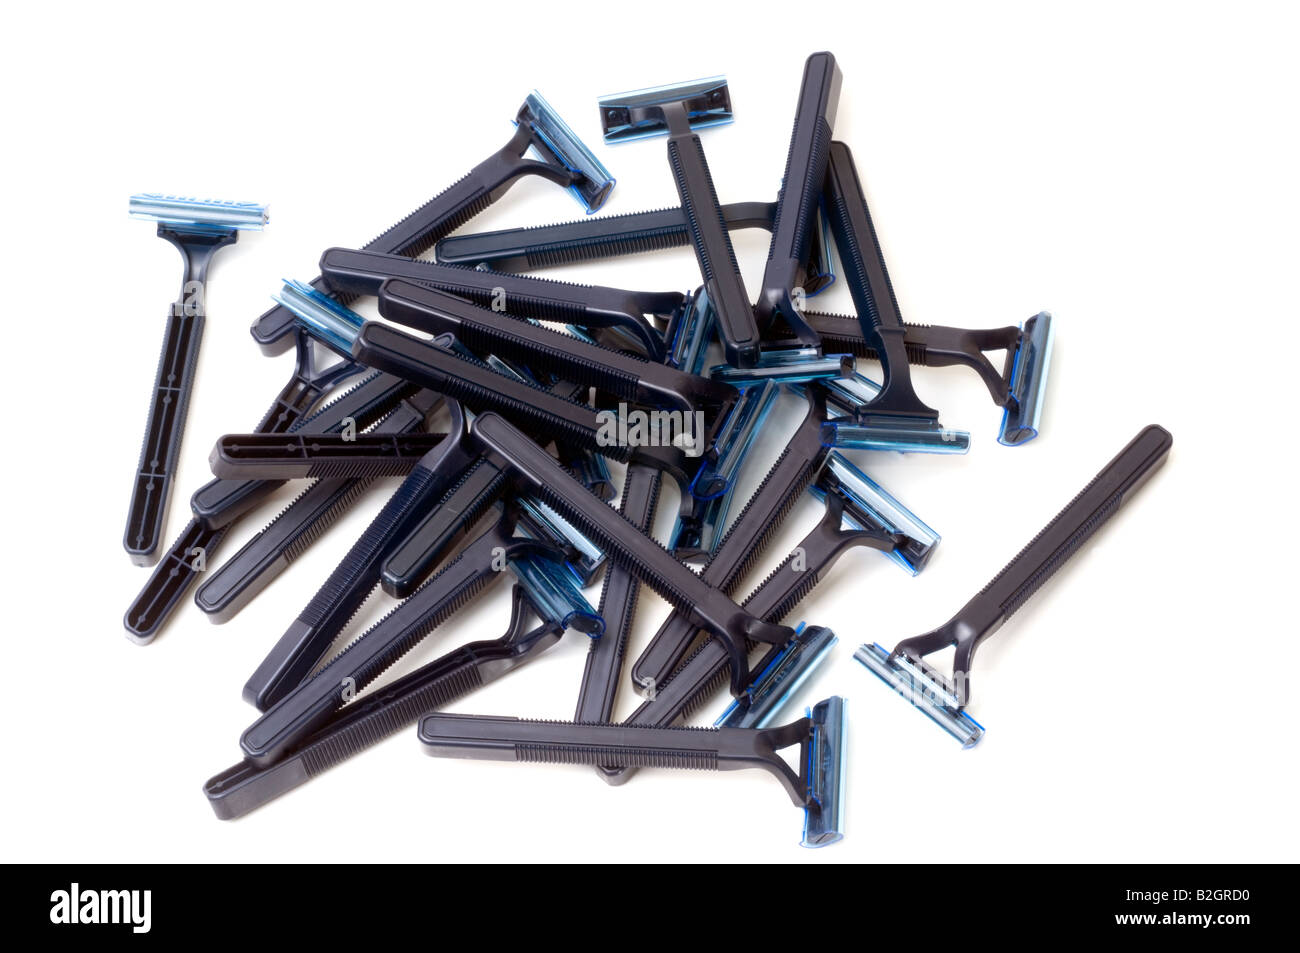 A heap of fixed and swivel head disposable plastic razors Stock Photo